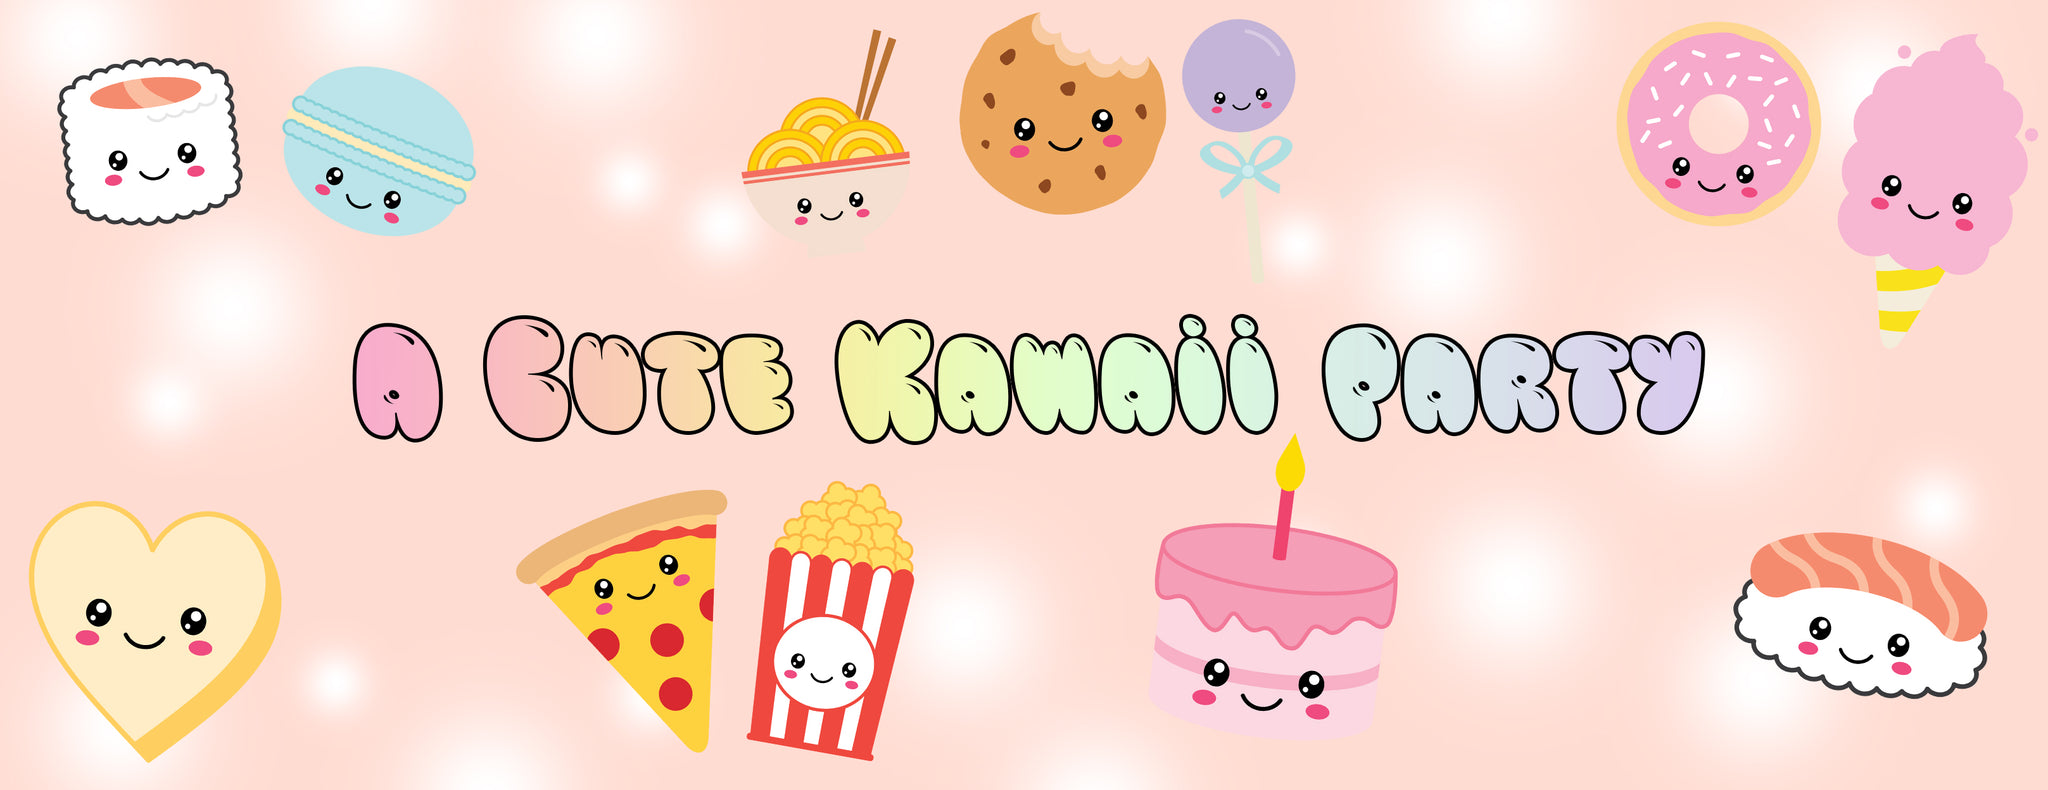 PARTY ET CIE EVENTS - A CUTE KAWAII PARTY